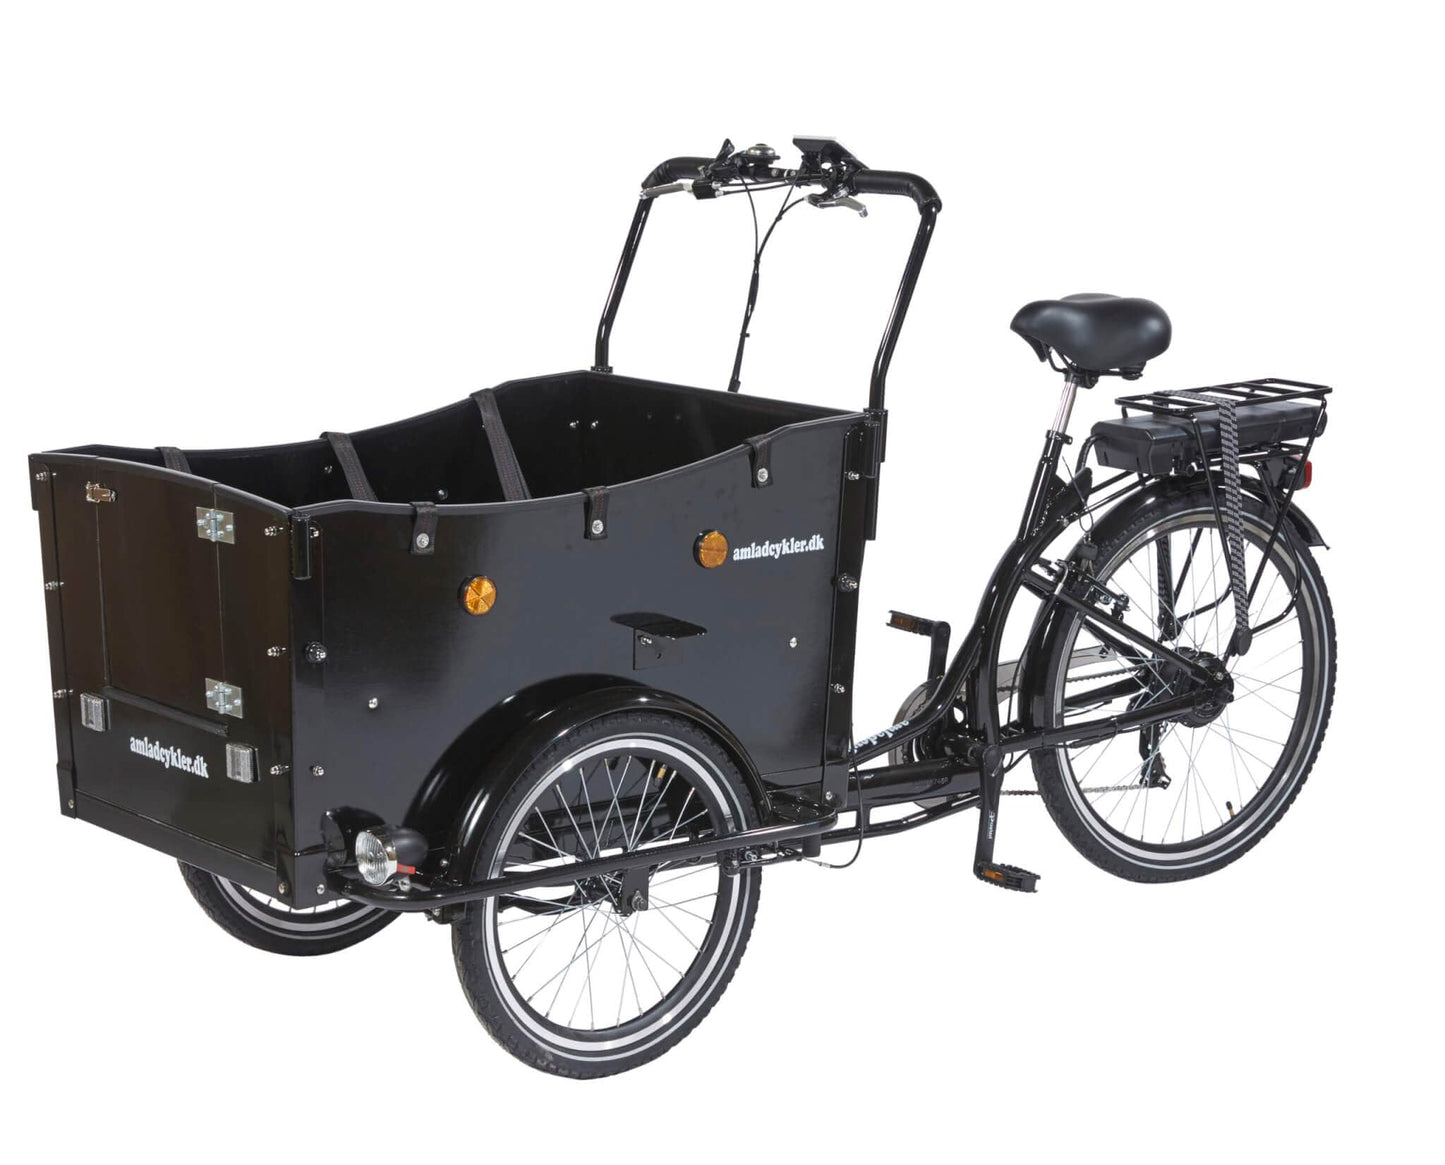 AM Cargo Curve KinderGarten Open Cargo Electric Tricycle – Black